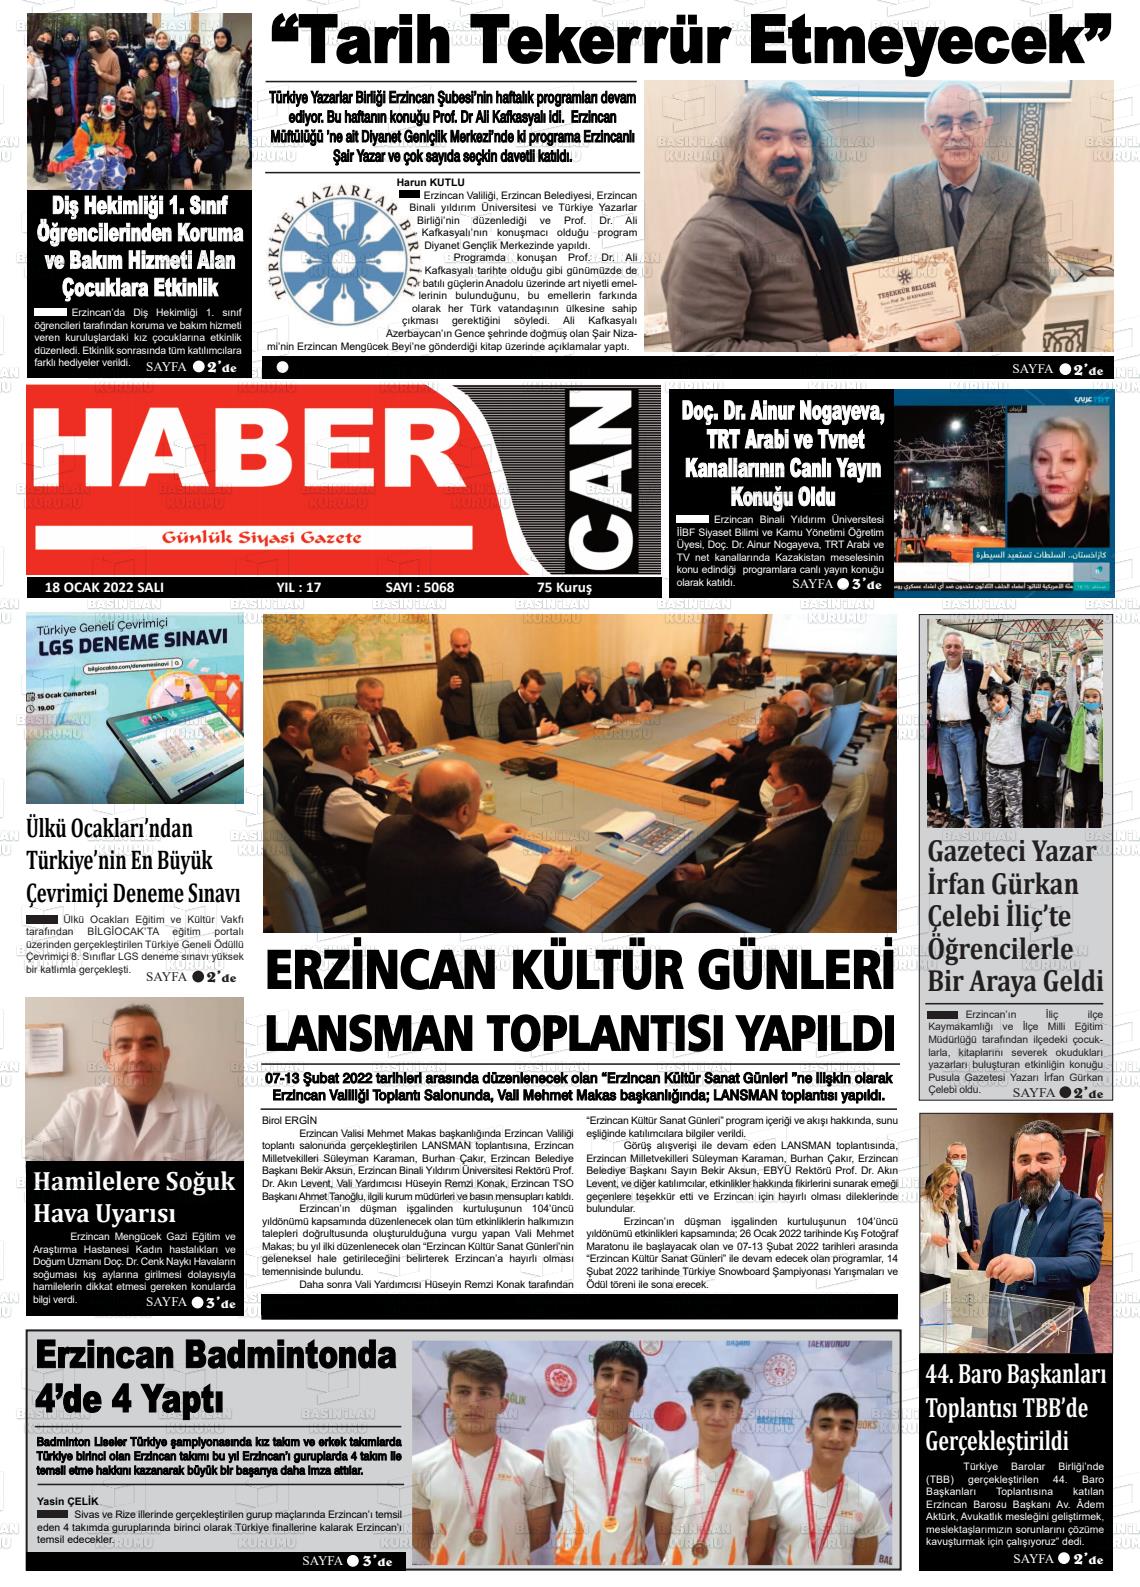 18 Ocak 2022 Erzincan Habercan Gazete Manşeti